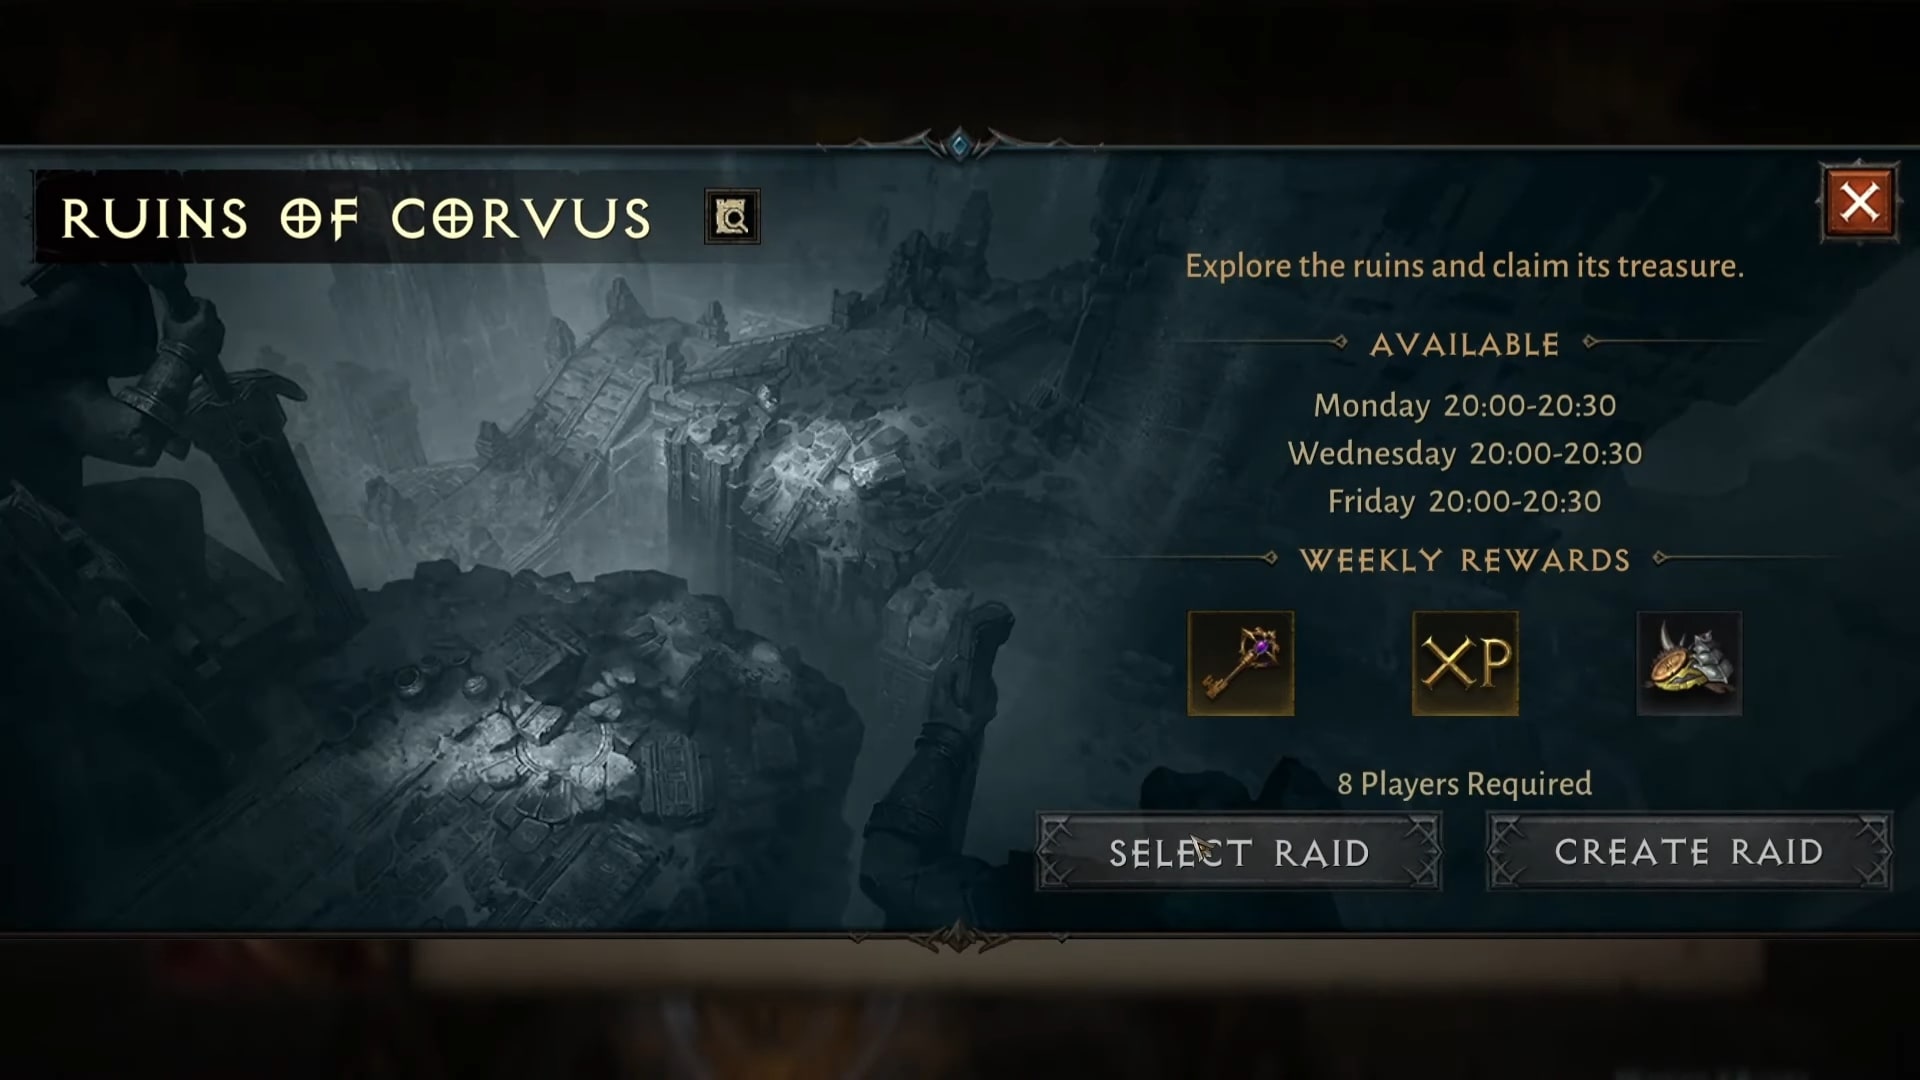 The timings for Ruins of Corvus